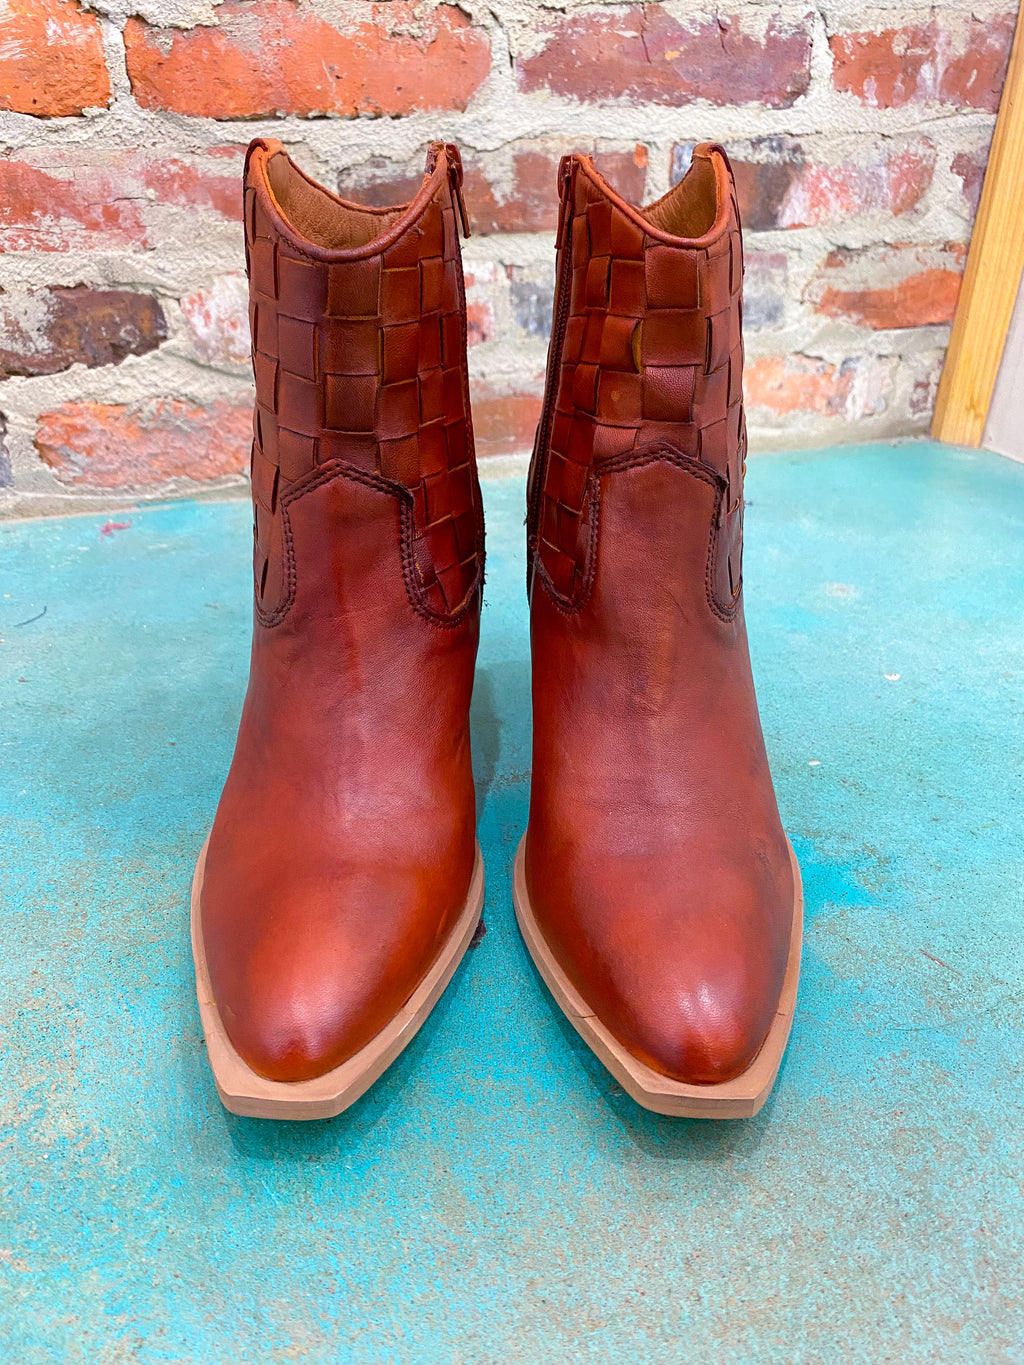 Matisse Dawn Cognac Brown Leather Boot